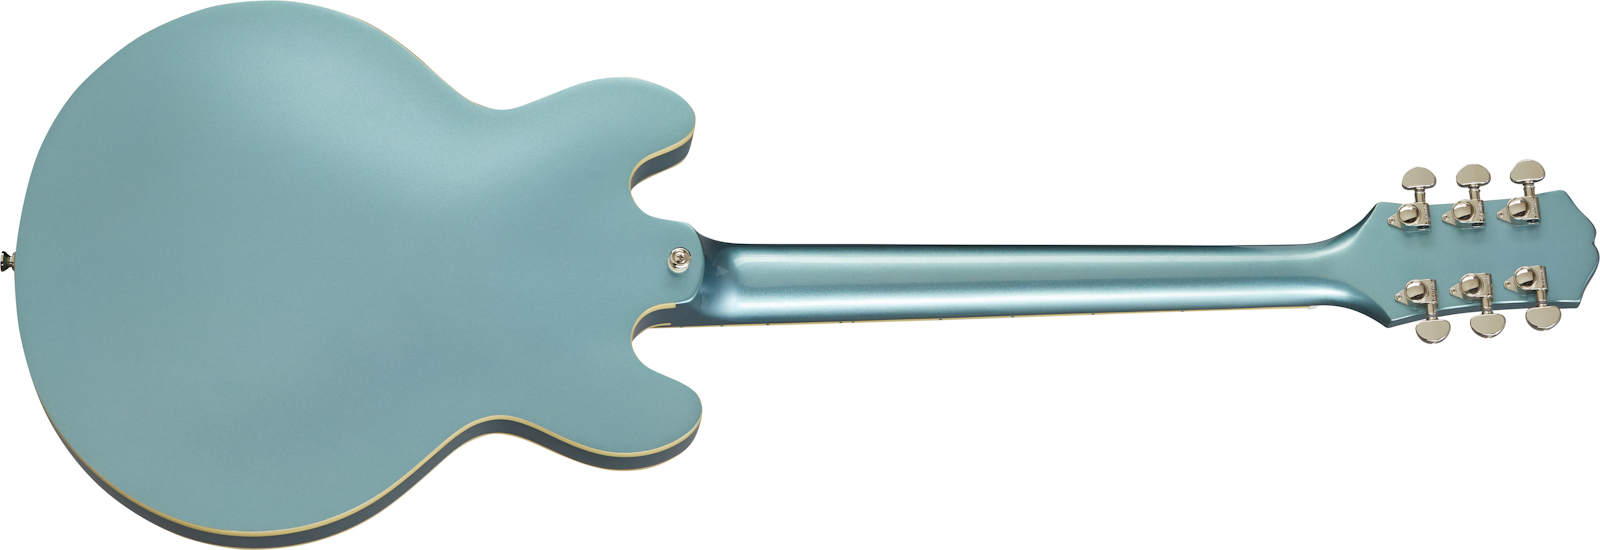 Epiphone Es-339 Inspired By Gibson 2020 2h Ht Rw - Pelham Blue - Guitare Électrique 1/2 Caisse - Variation 1